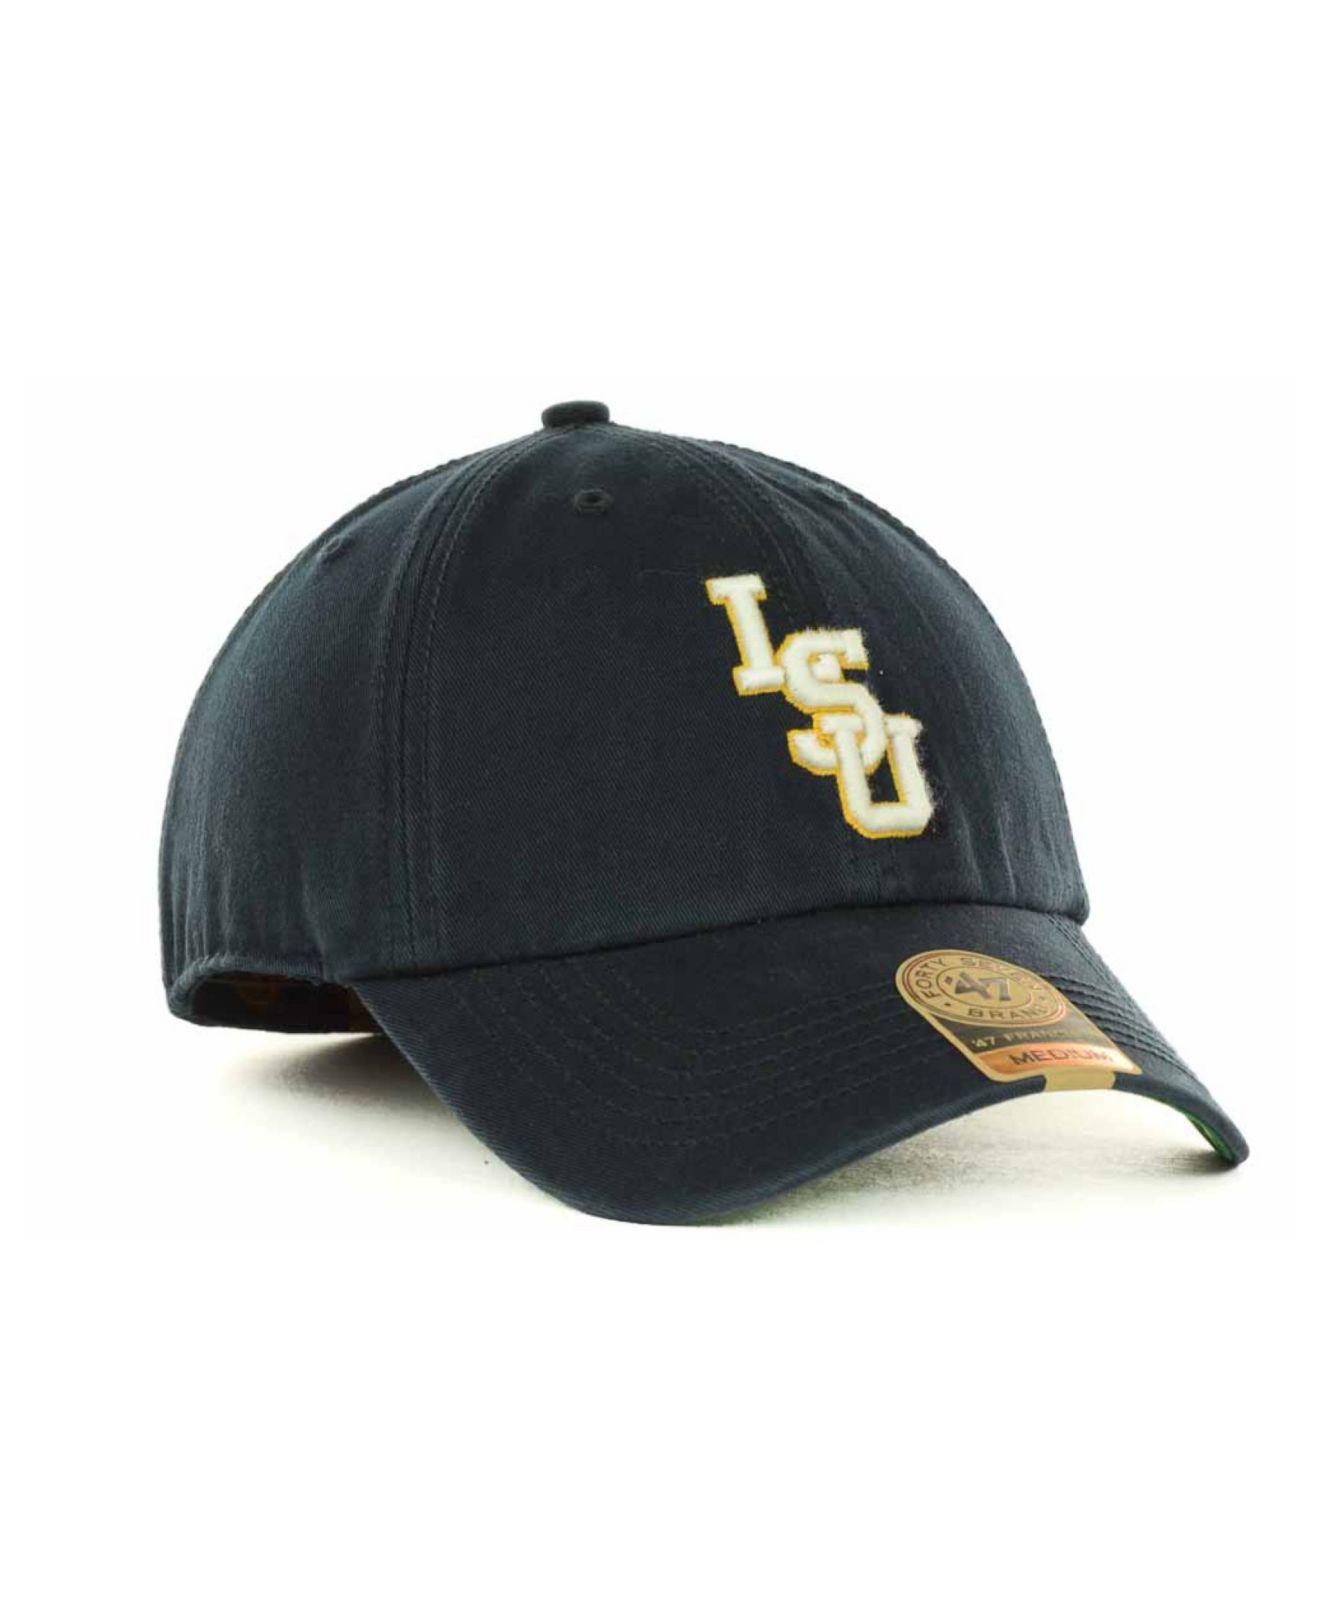 Men's LSU Tigers Hats